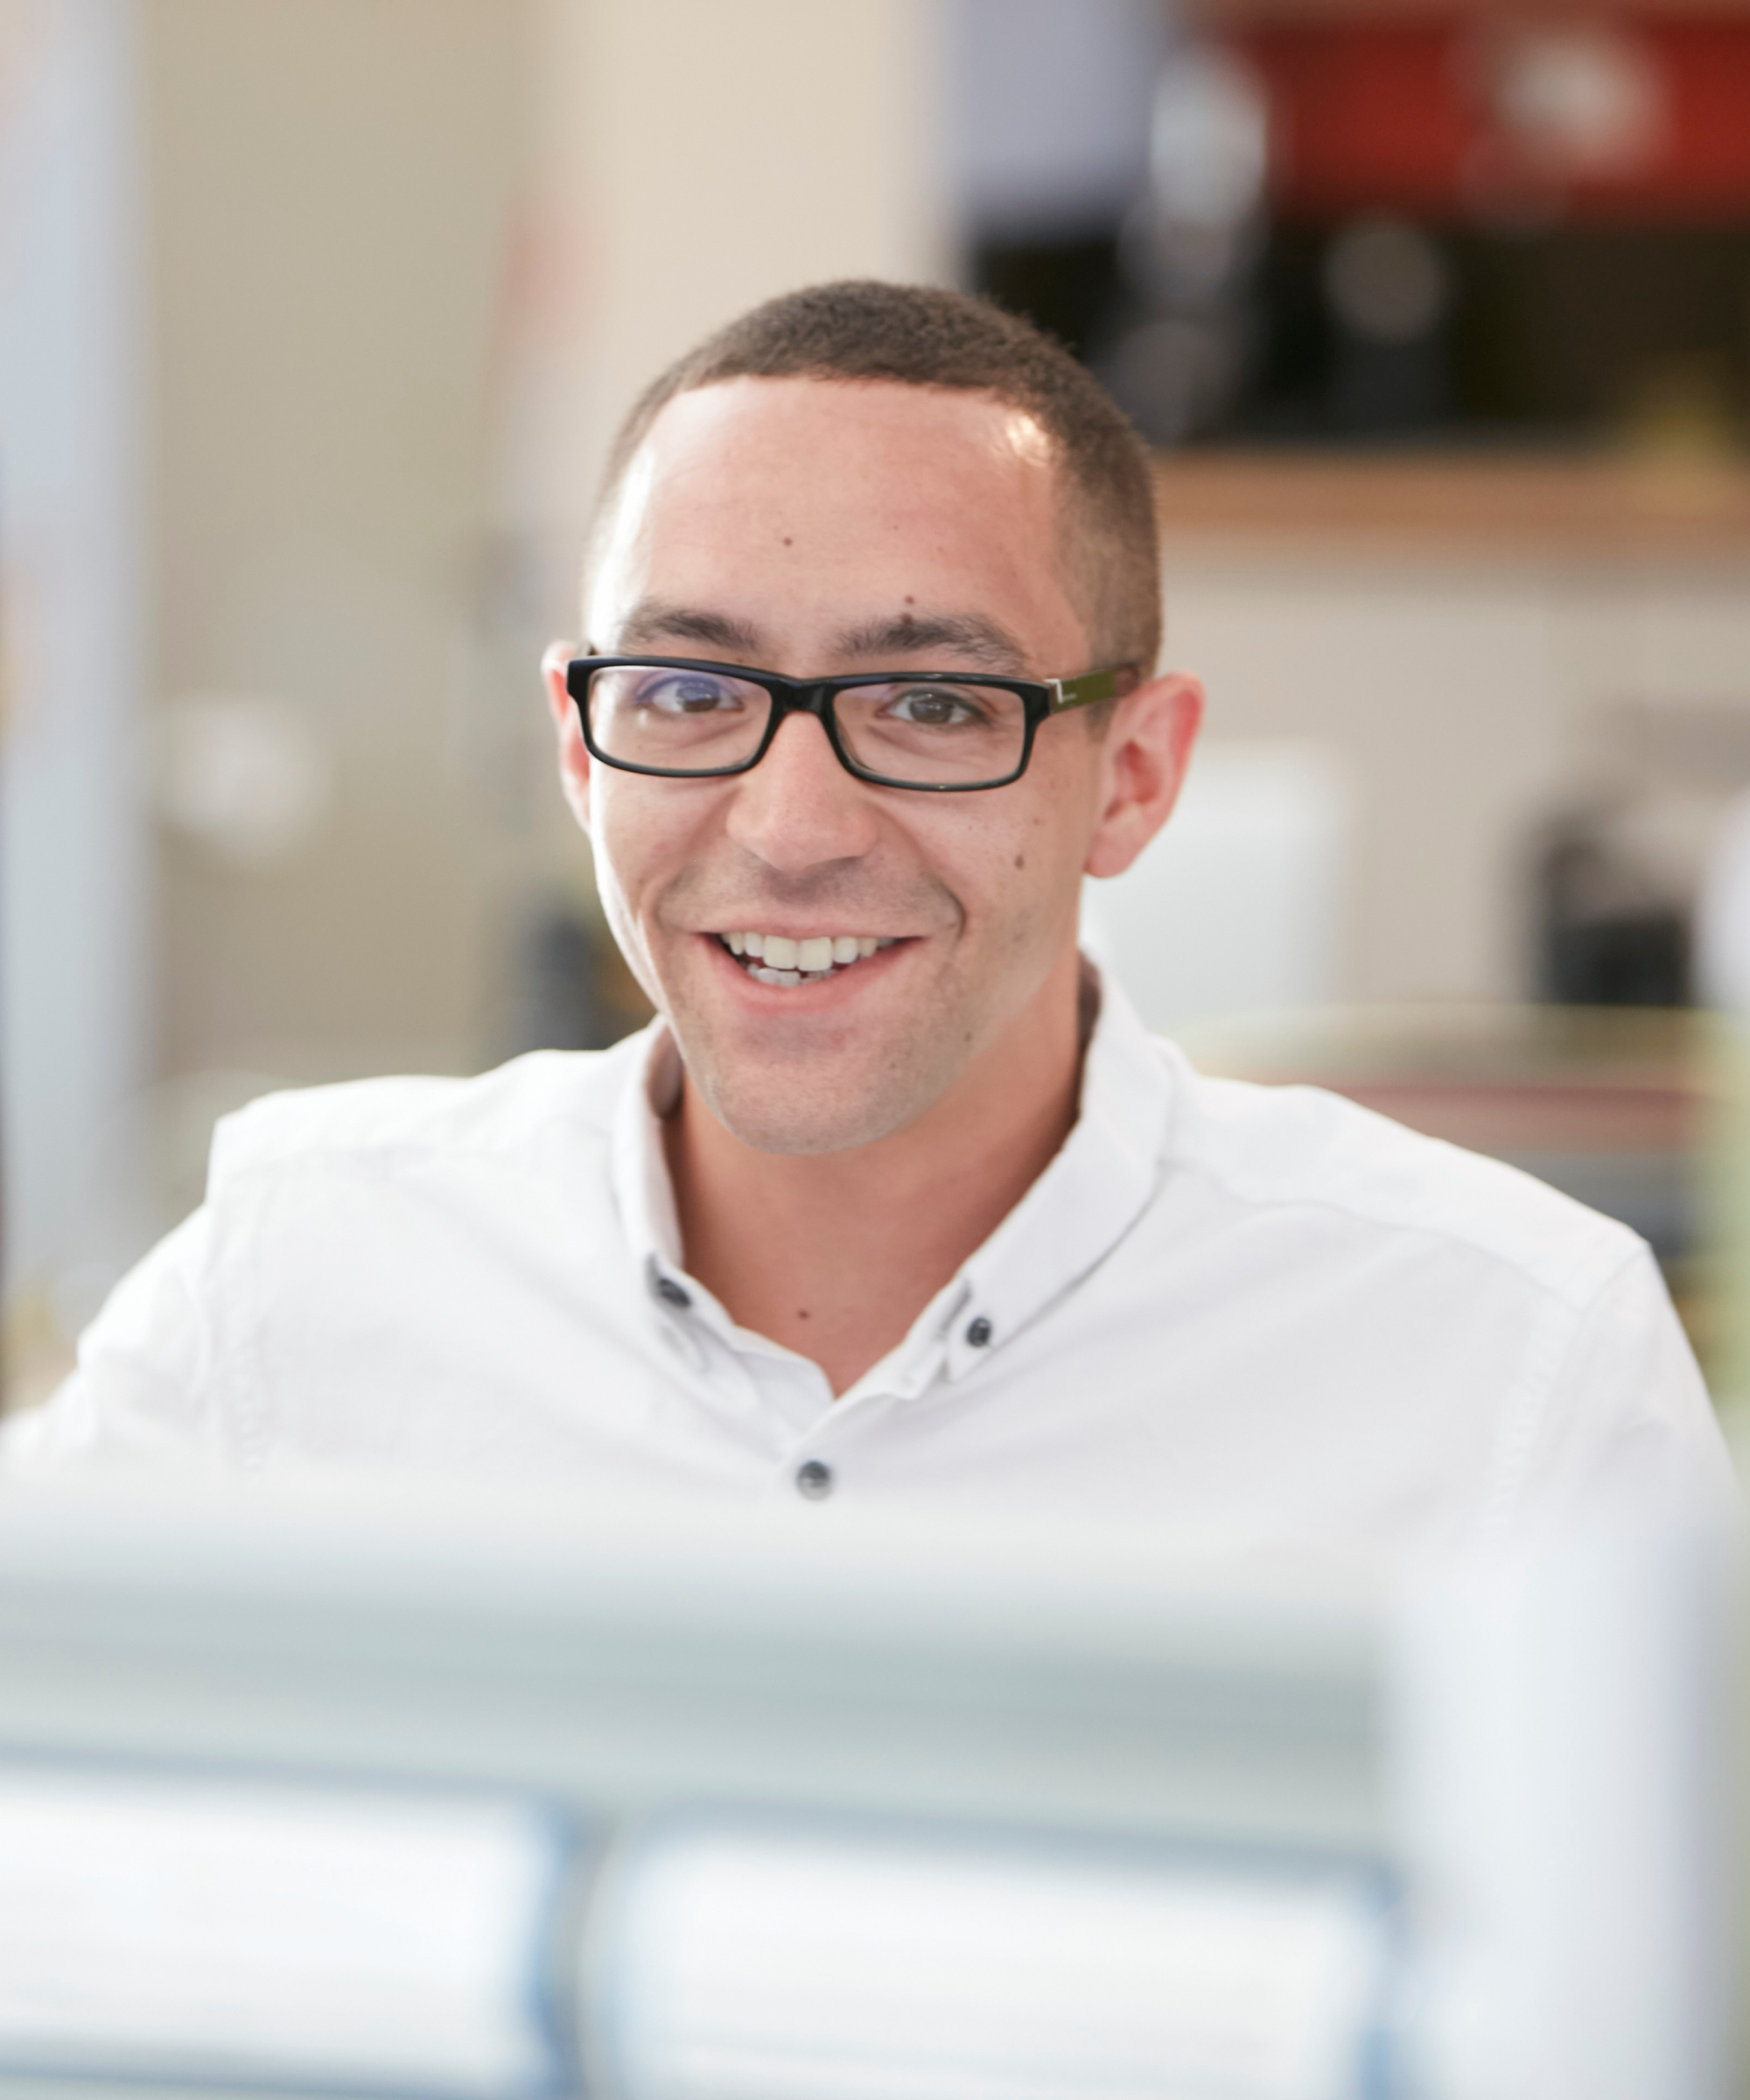 headshot of man in white shirt wearing glasses sat at computer